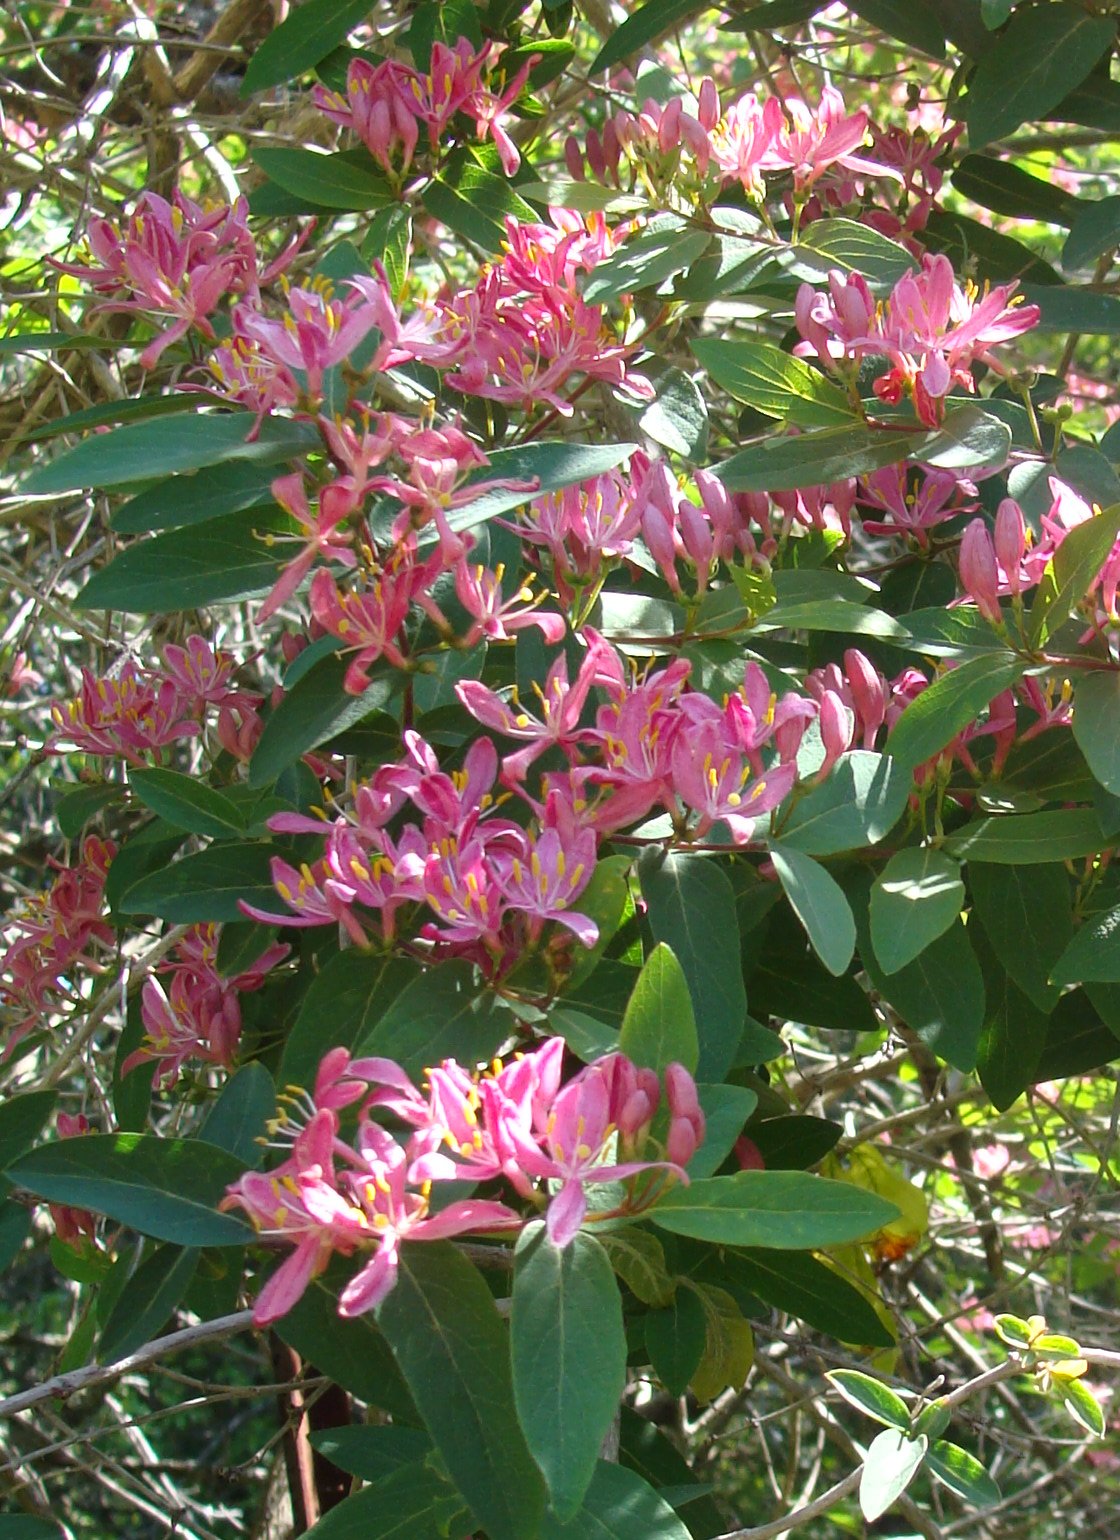 Unidentified pink-flowered shrub